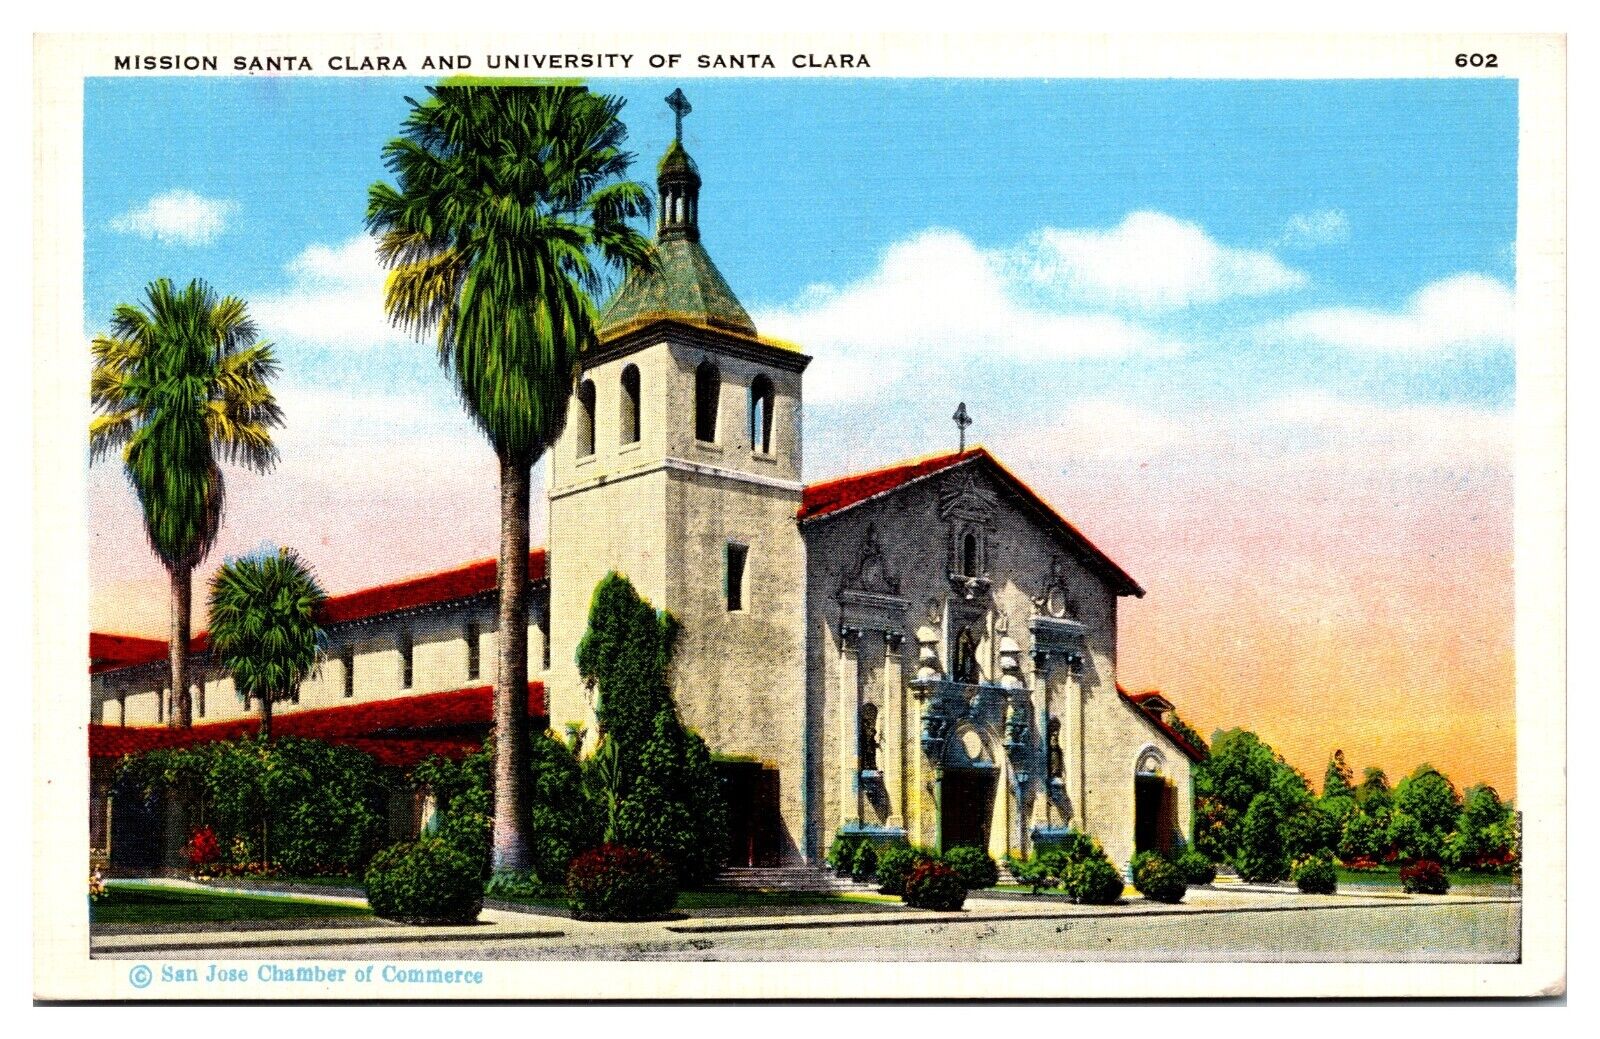 VTG Mission Santa Clara and University of Santa Clara, Est. 1777, San Jose, CA